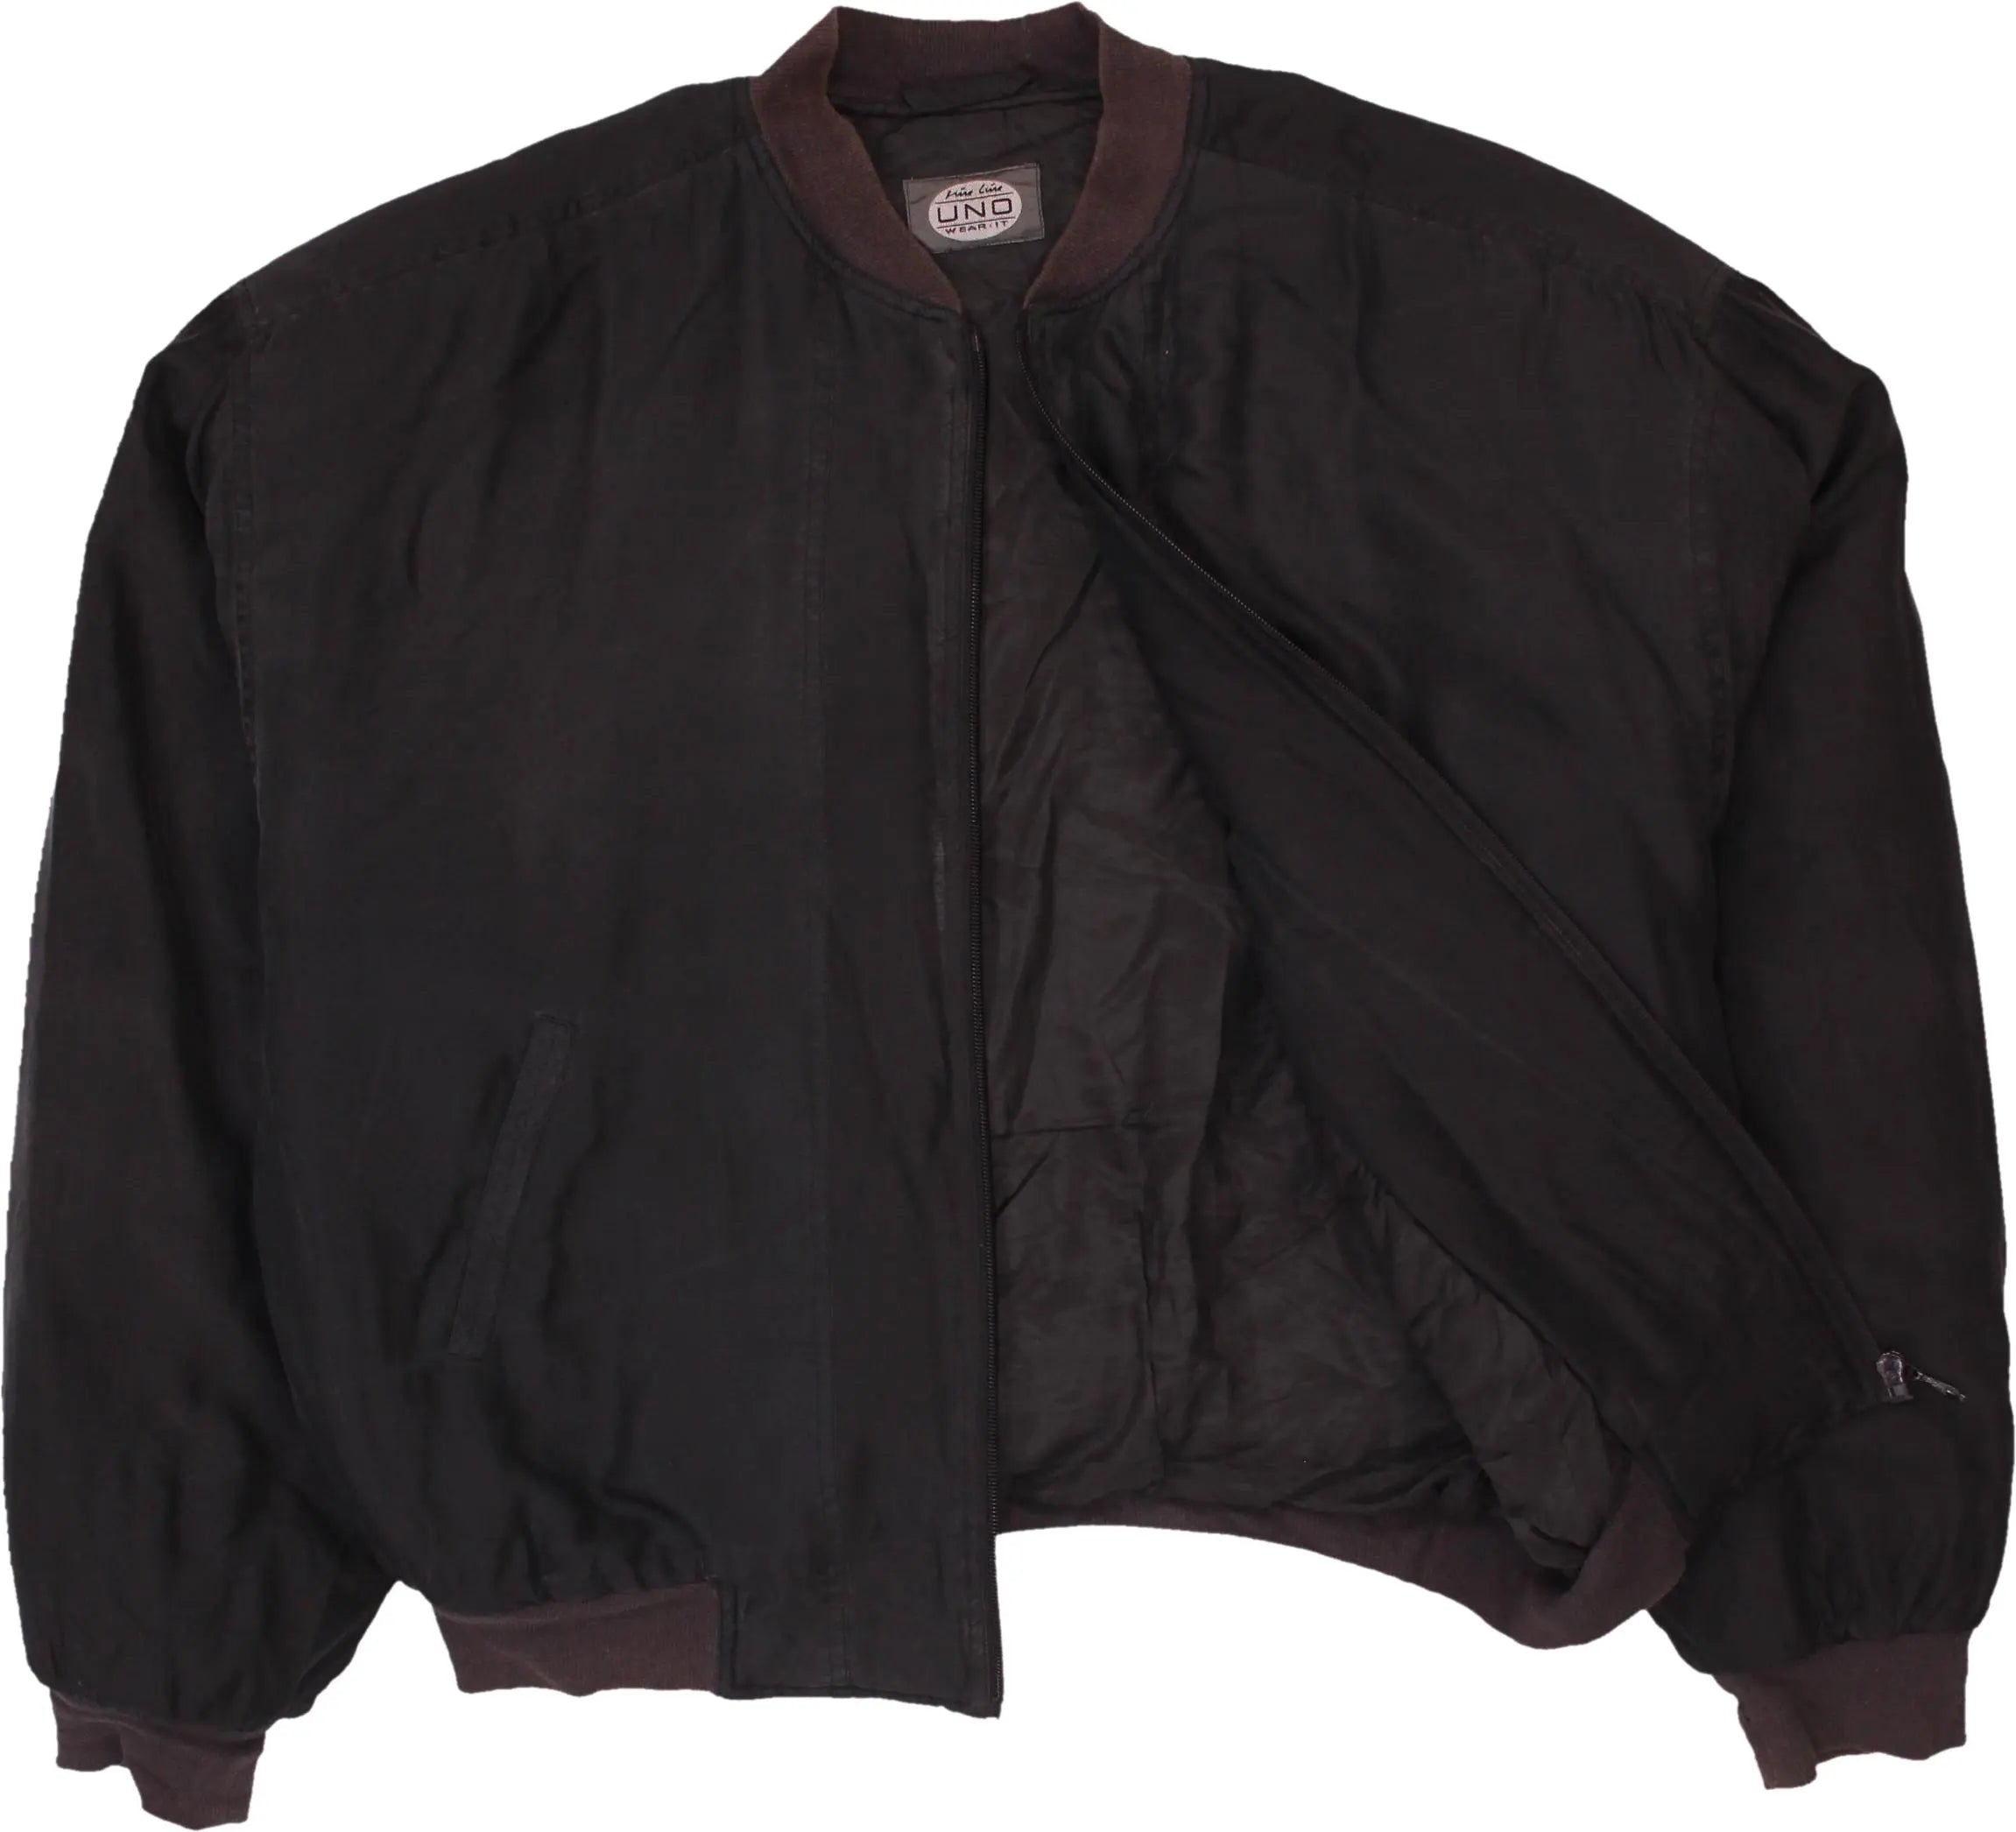 Uno - Vintage 100% Silk Bomber Jacket with Shoulder Pads- ThriftTale.com - Vintage and second handclothing